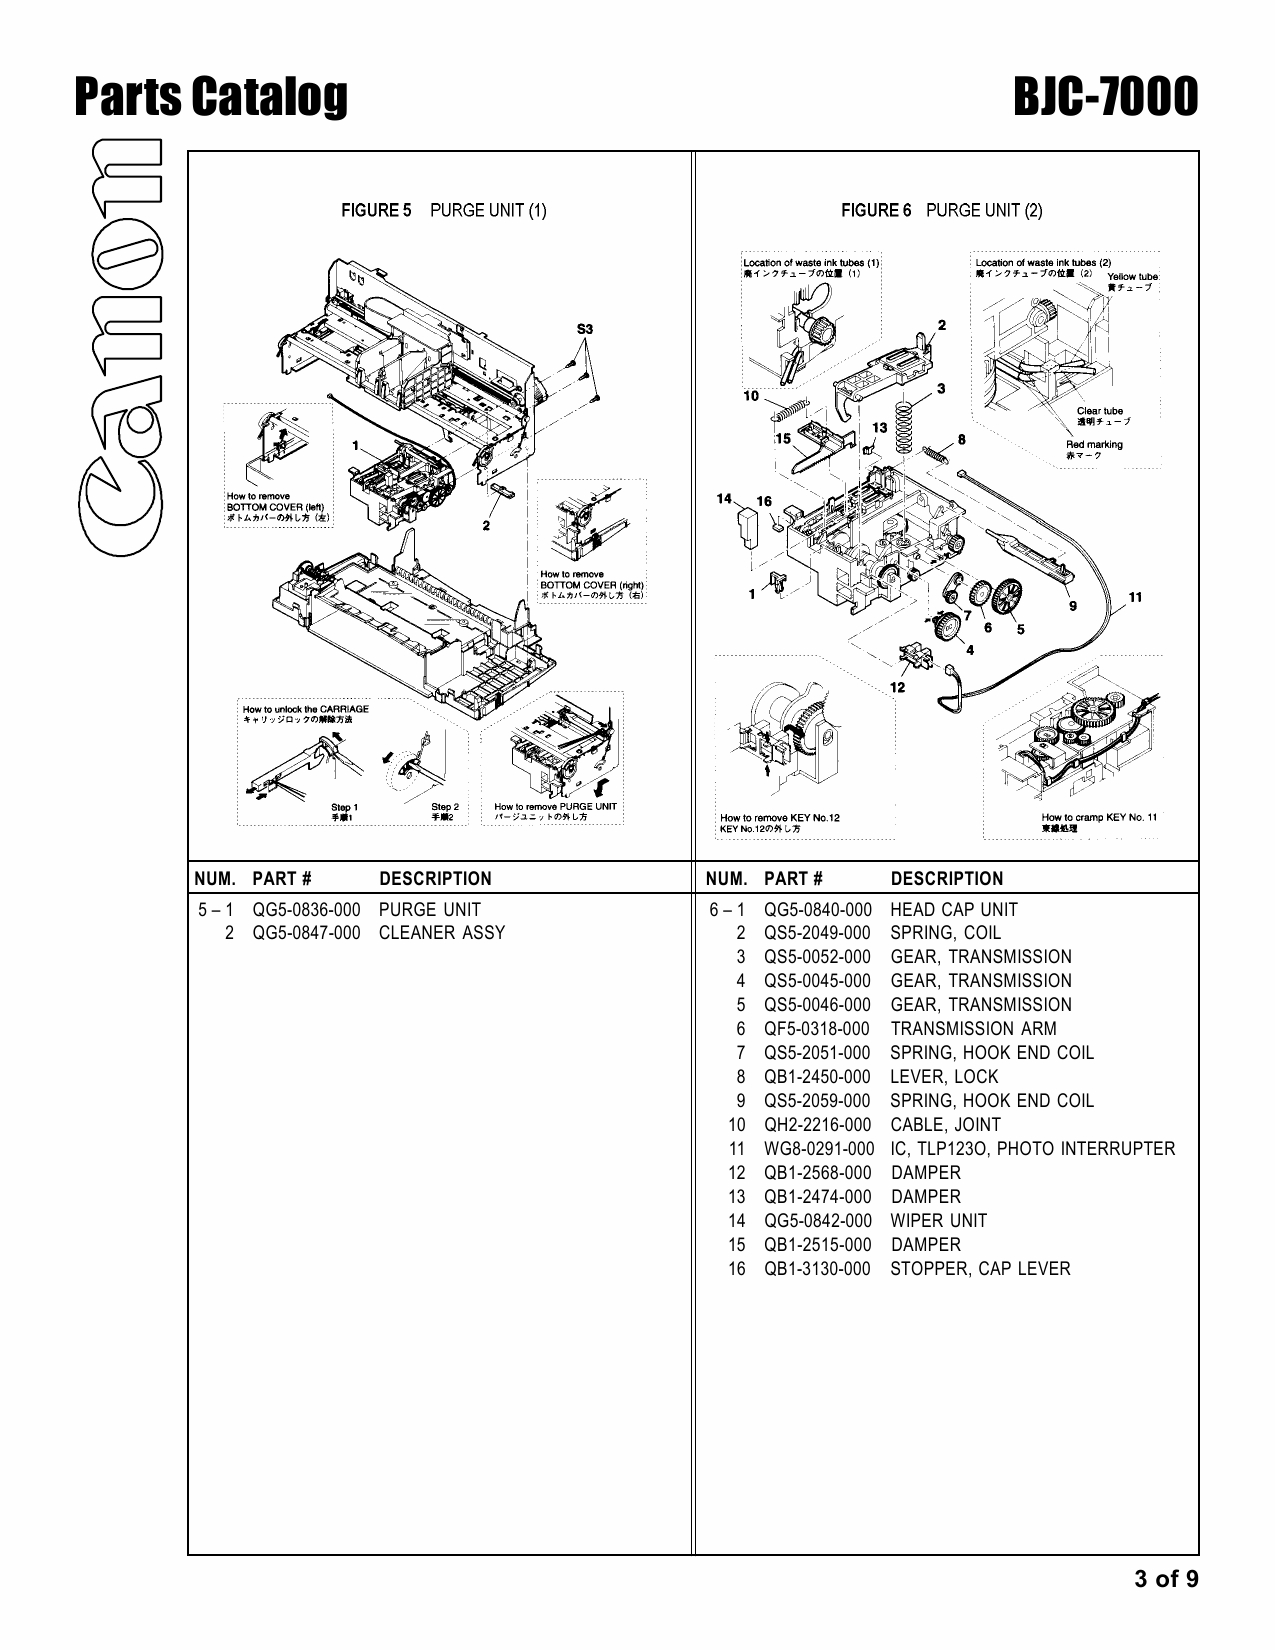 Canon BubbleJet BJC-7000 Parts Catalog Manual-3